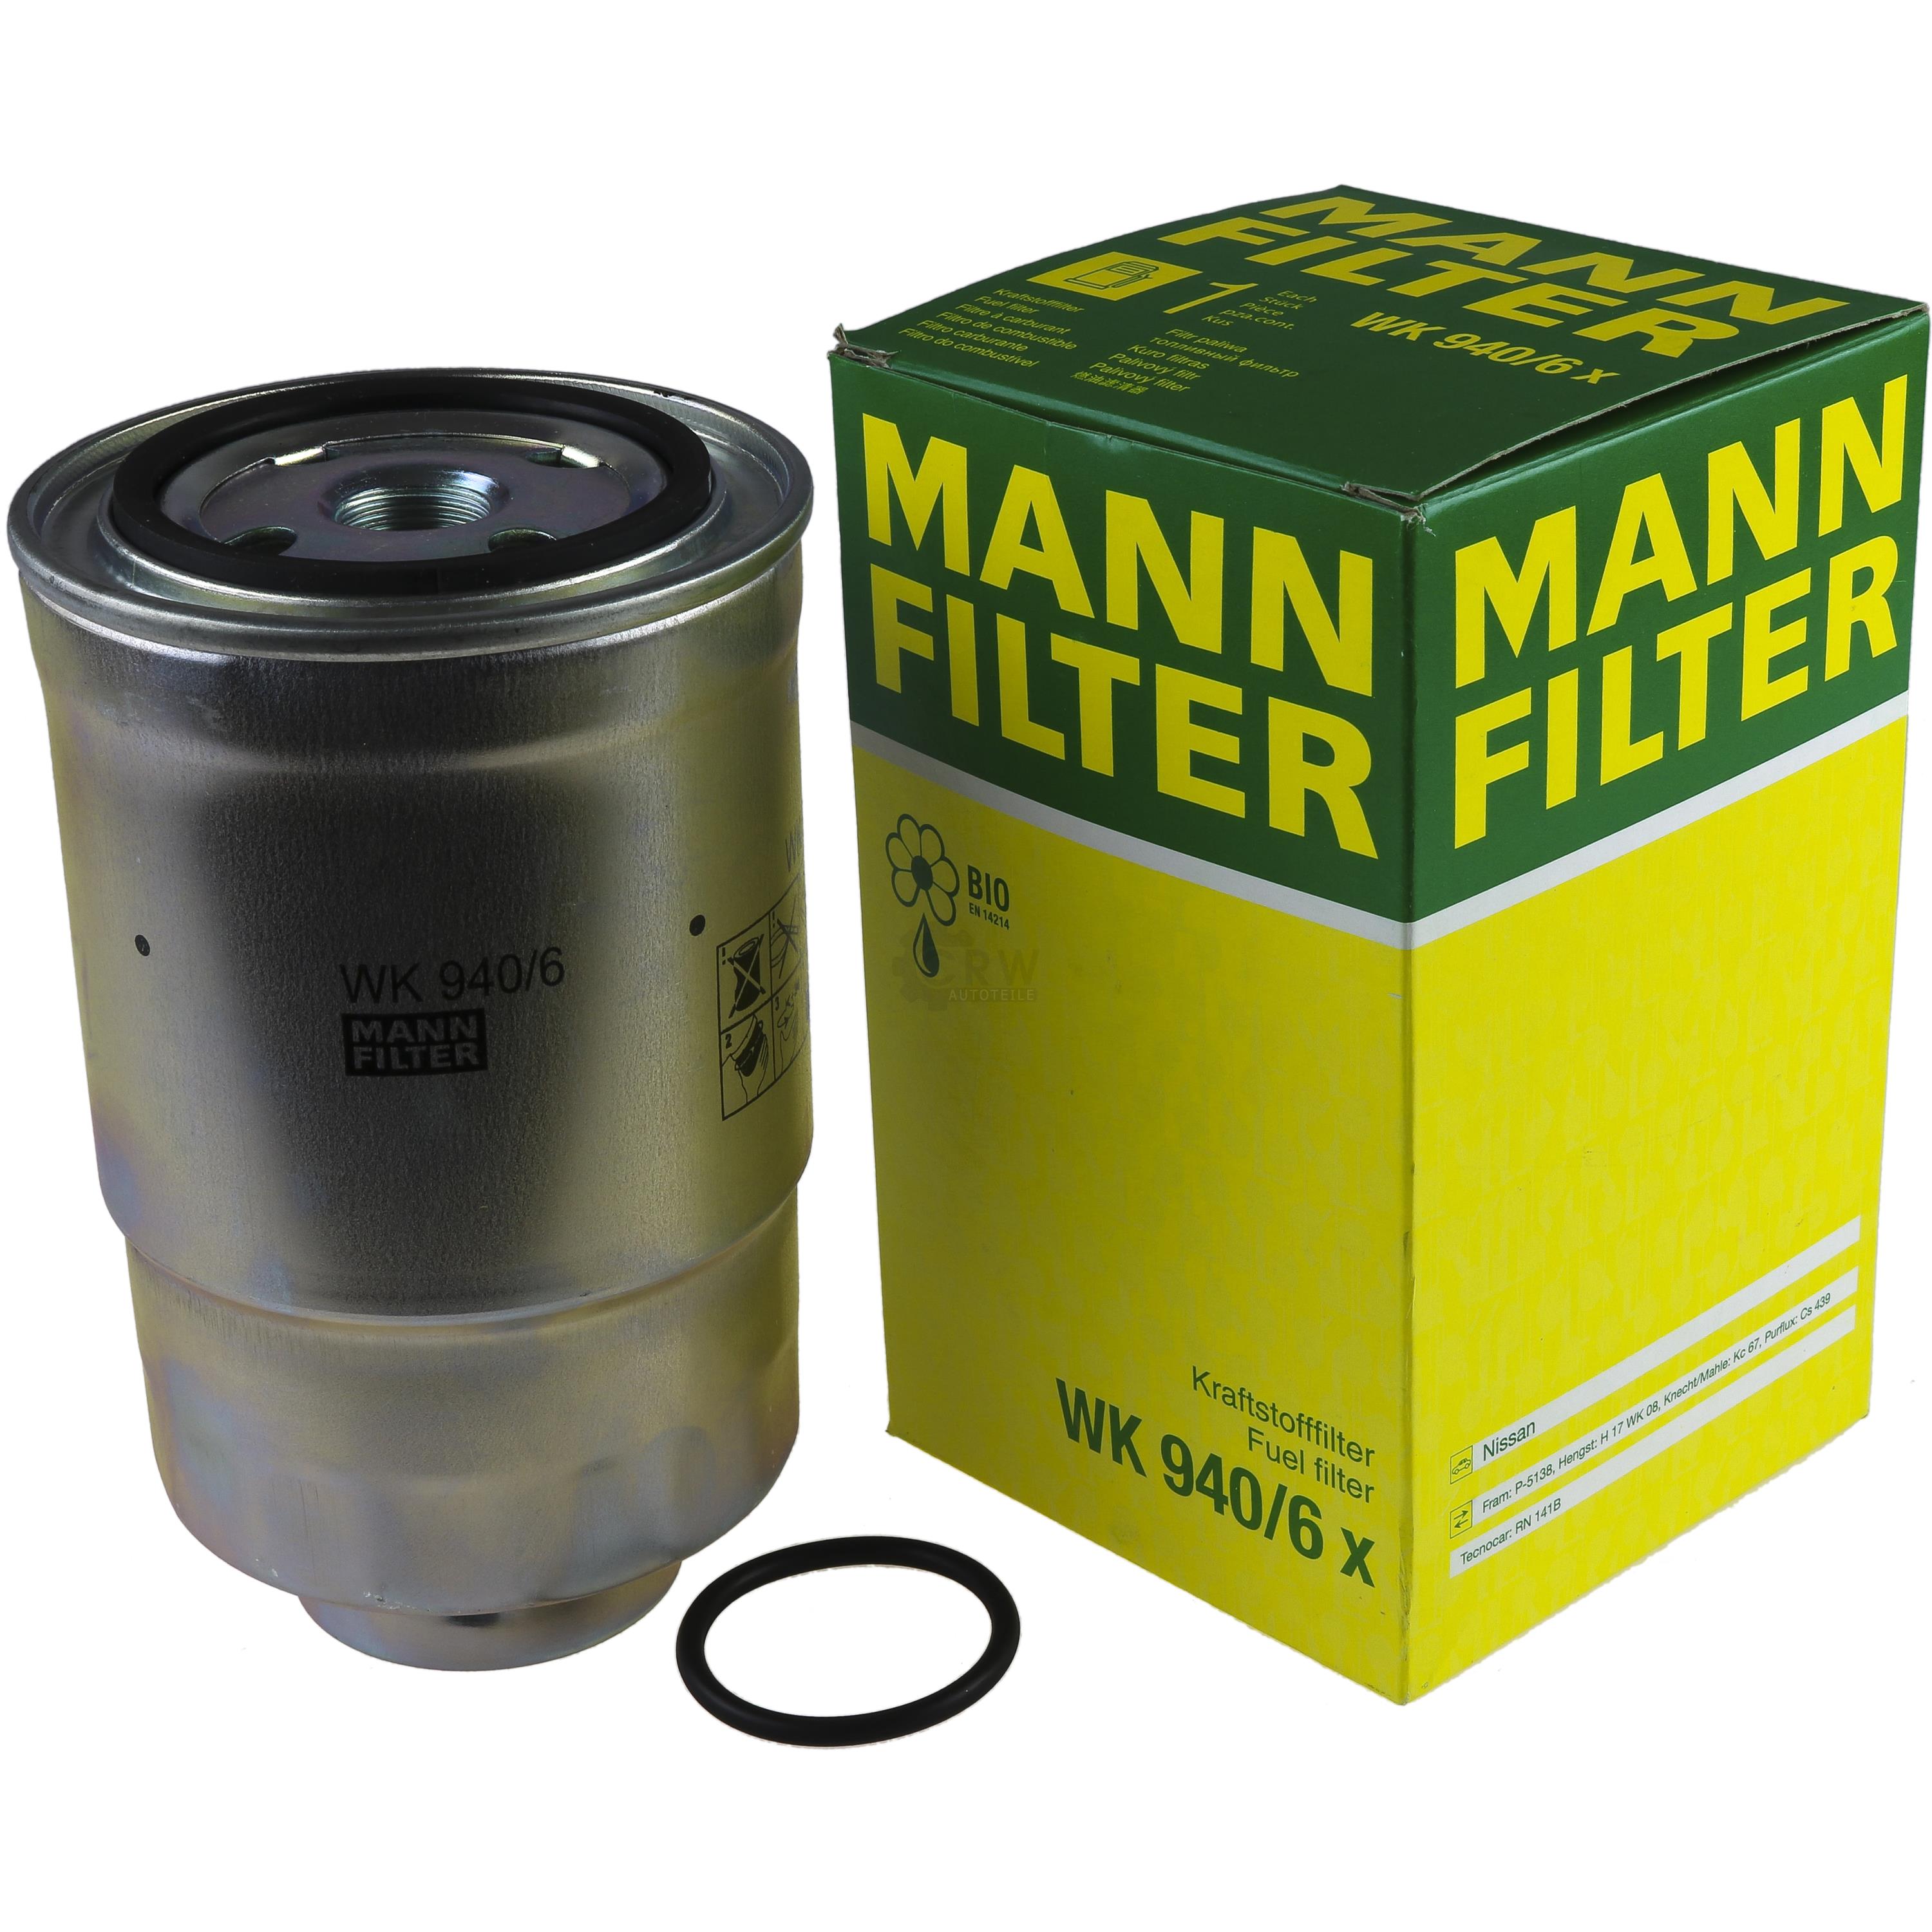 MANN-FILTER Kraftstofffilter WK 940/6 x Fuel Filter